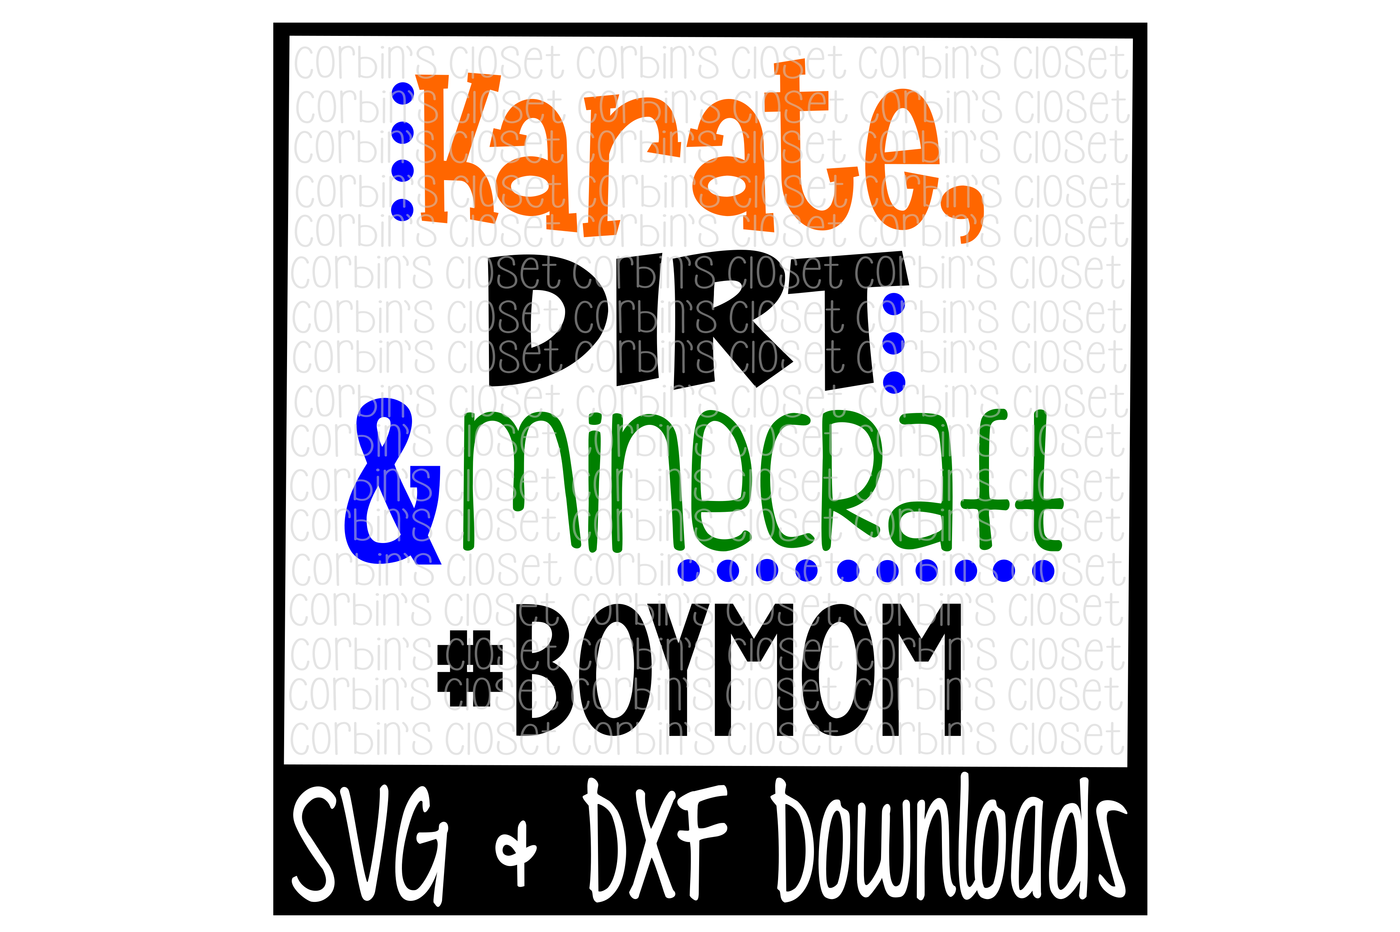 Download Boy Mom Svg Karate Dirt And Minecraft Boymom Cut File By Corbins Svg Thehungryjpeg Com